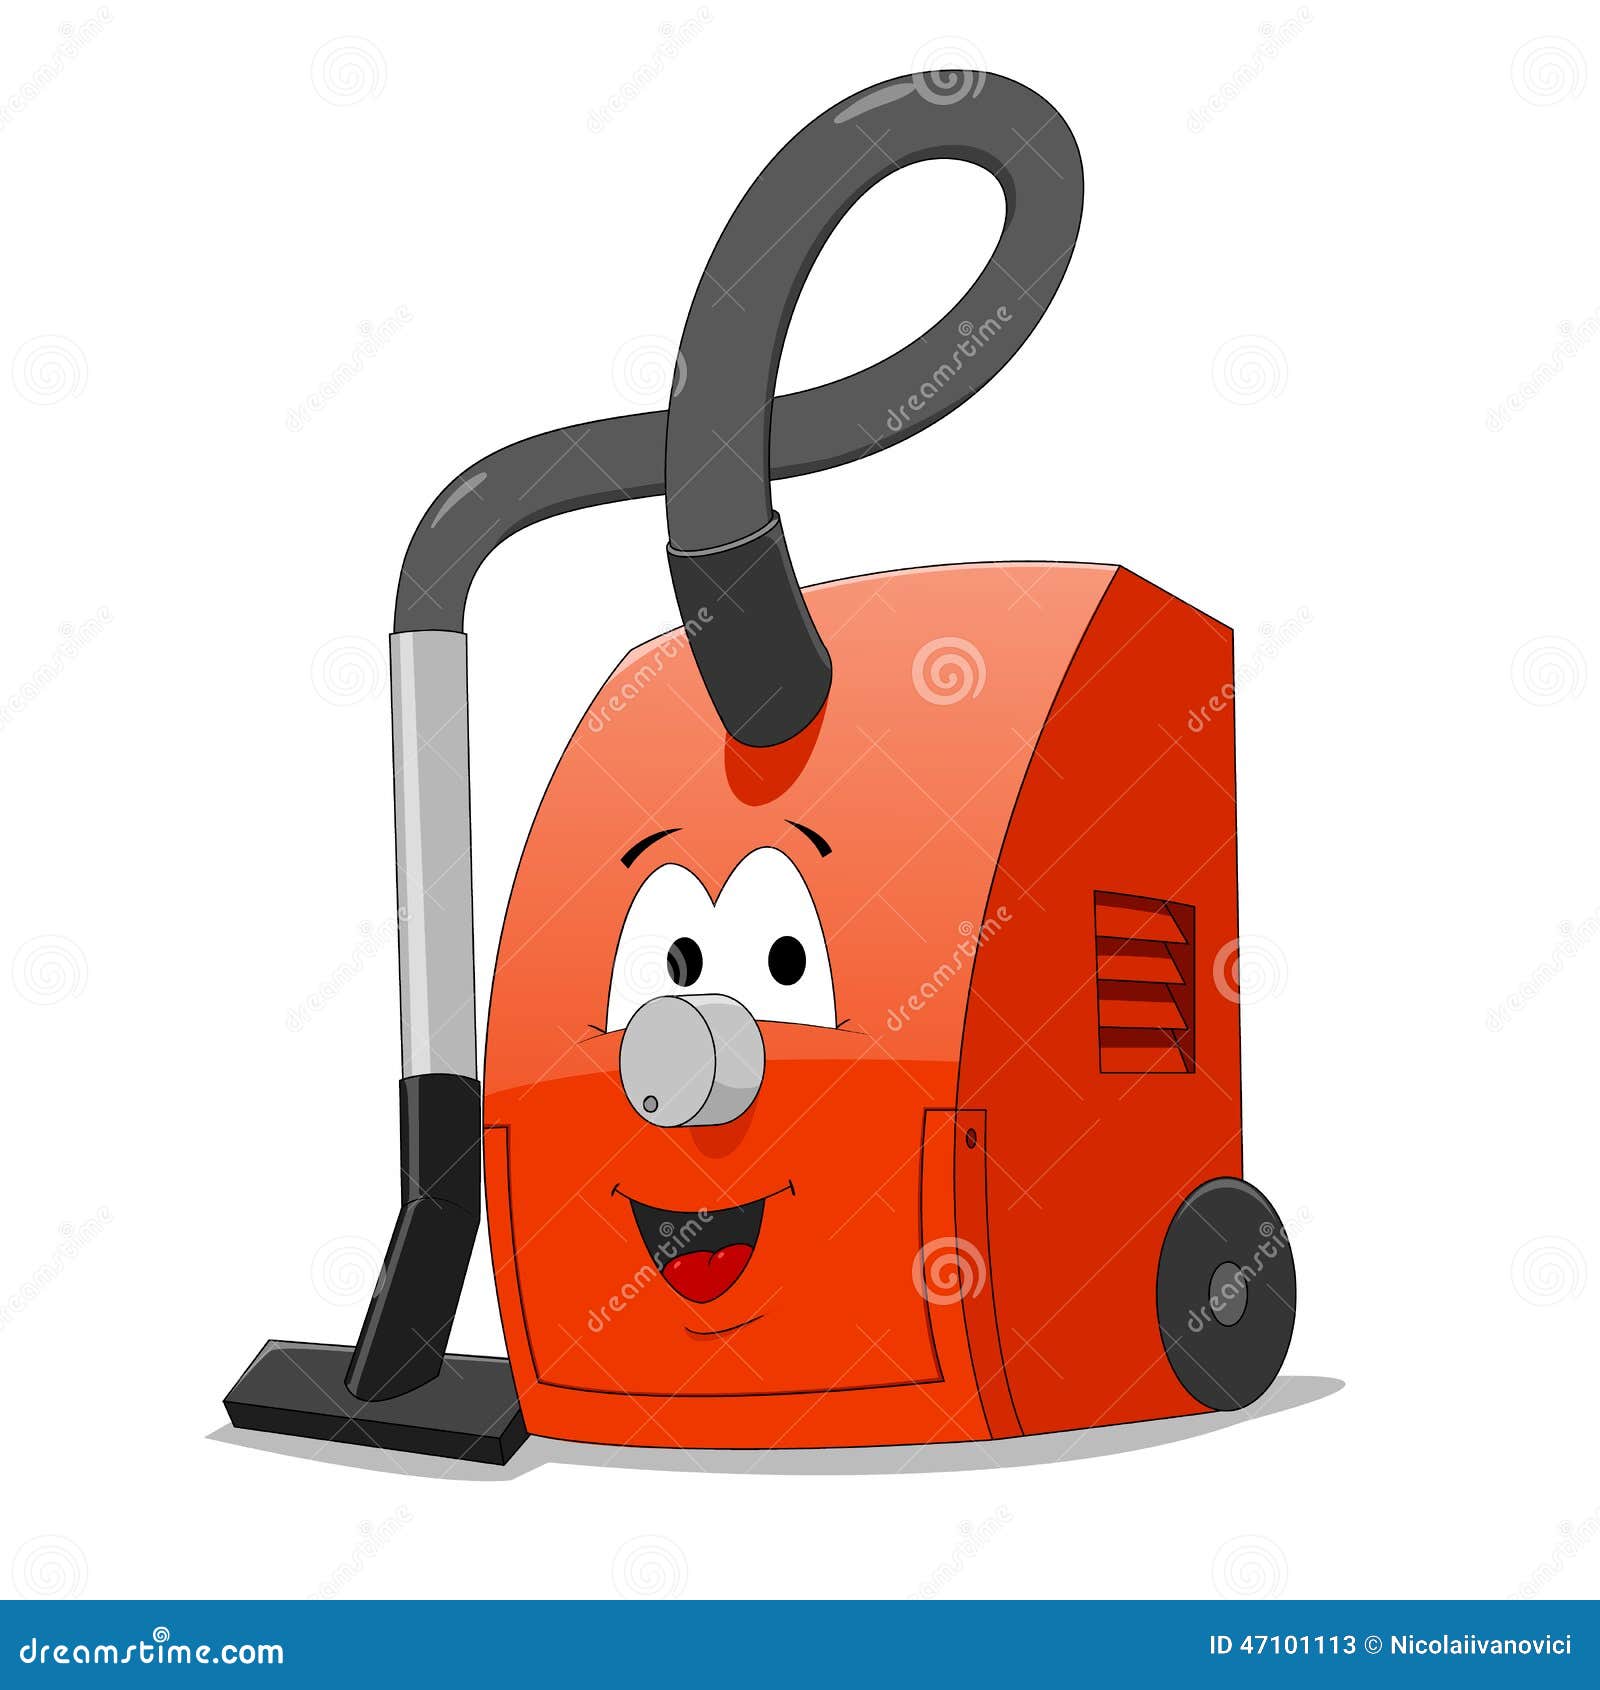 Vacuum cleaner stock vector. Illustration of vector, metal - 47101113